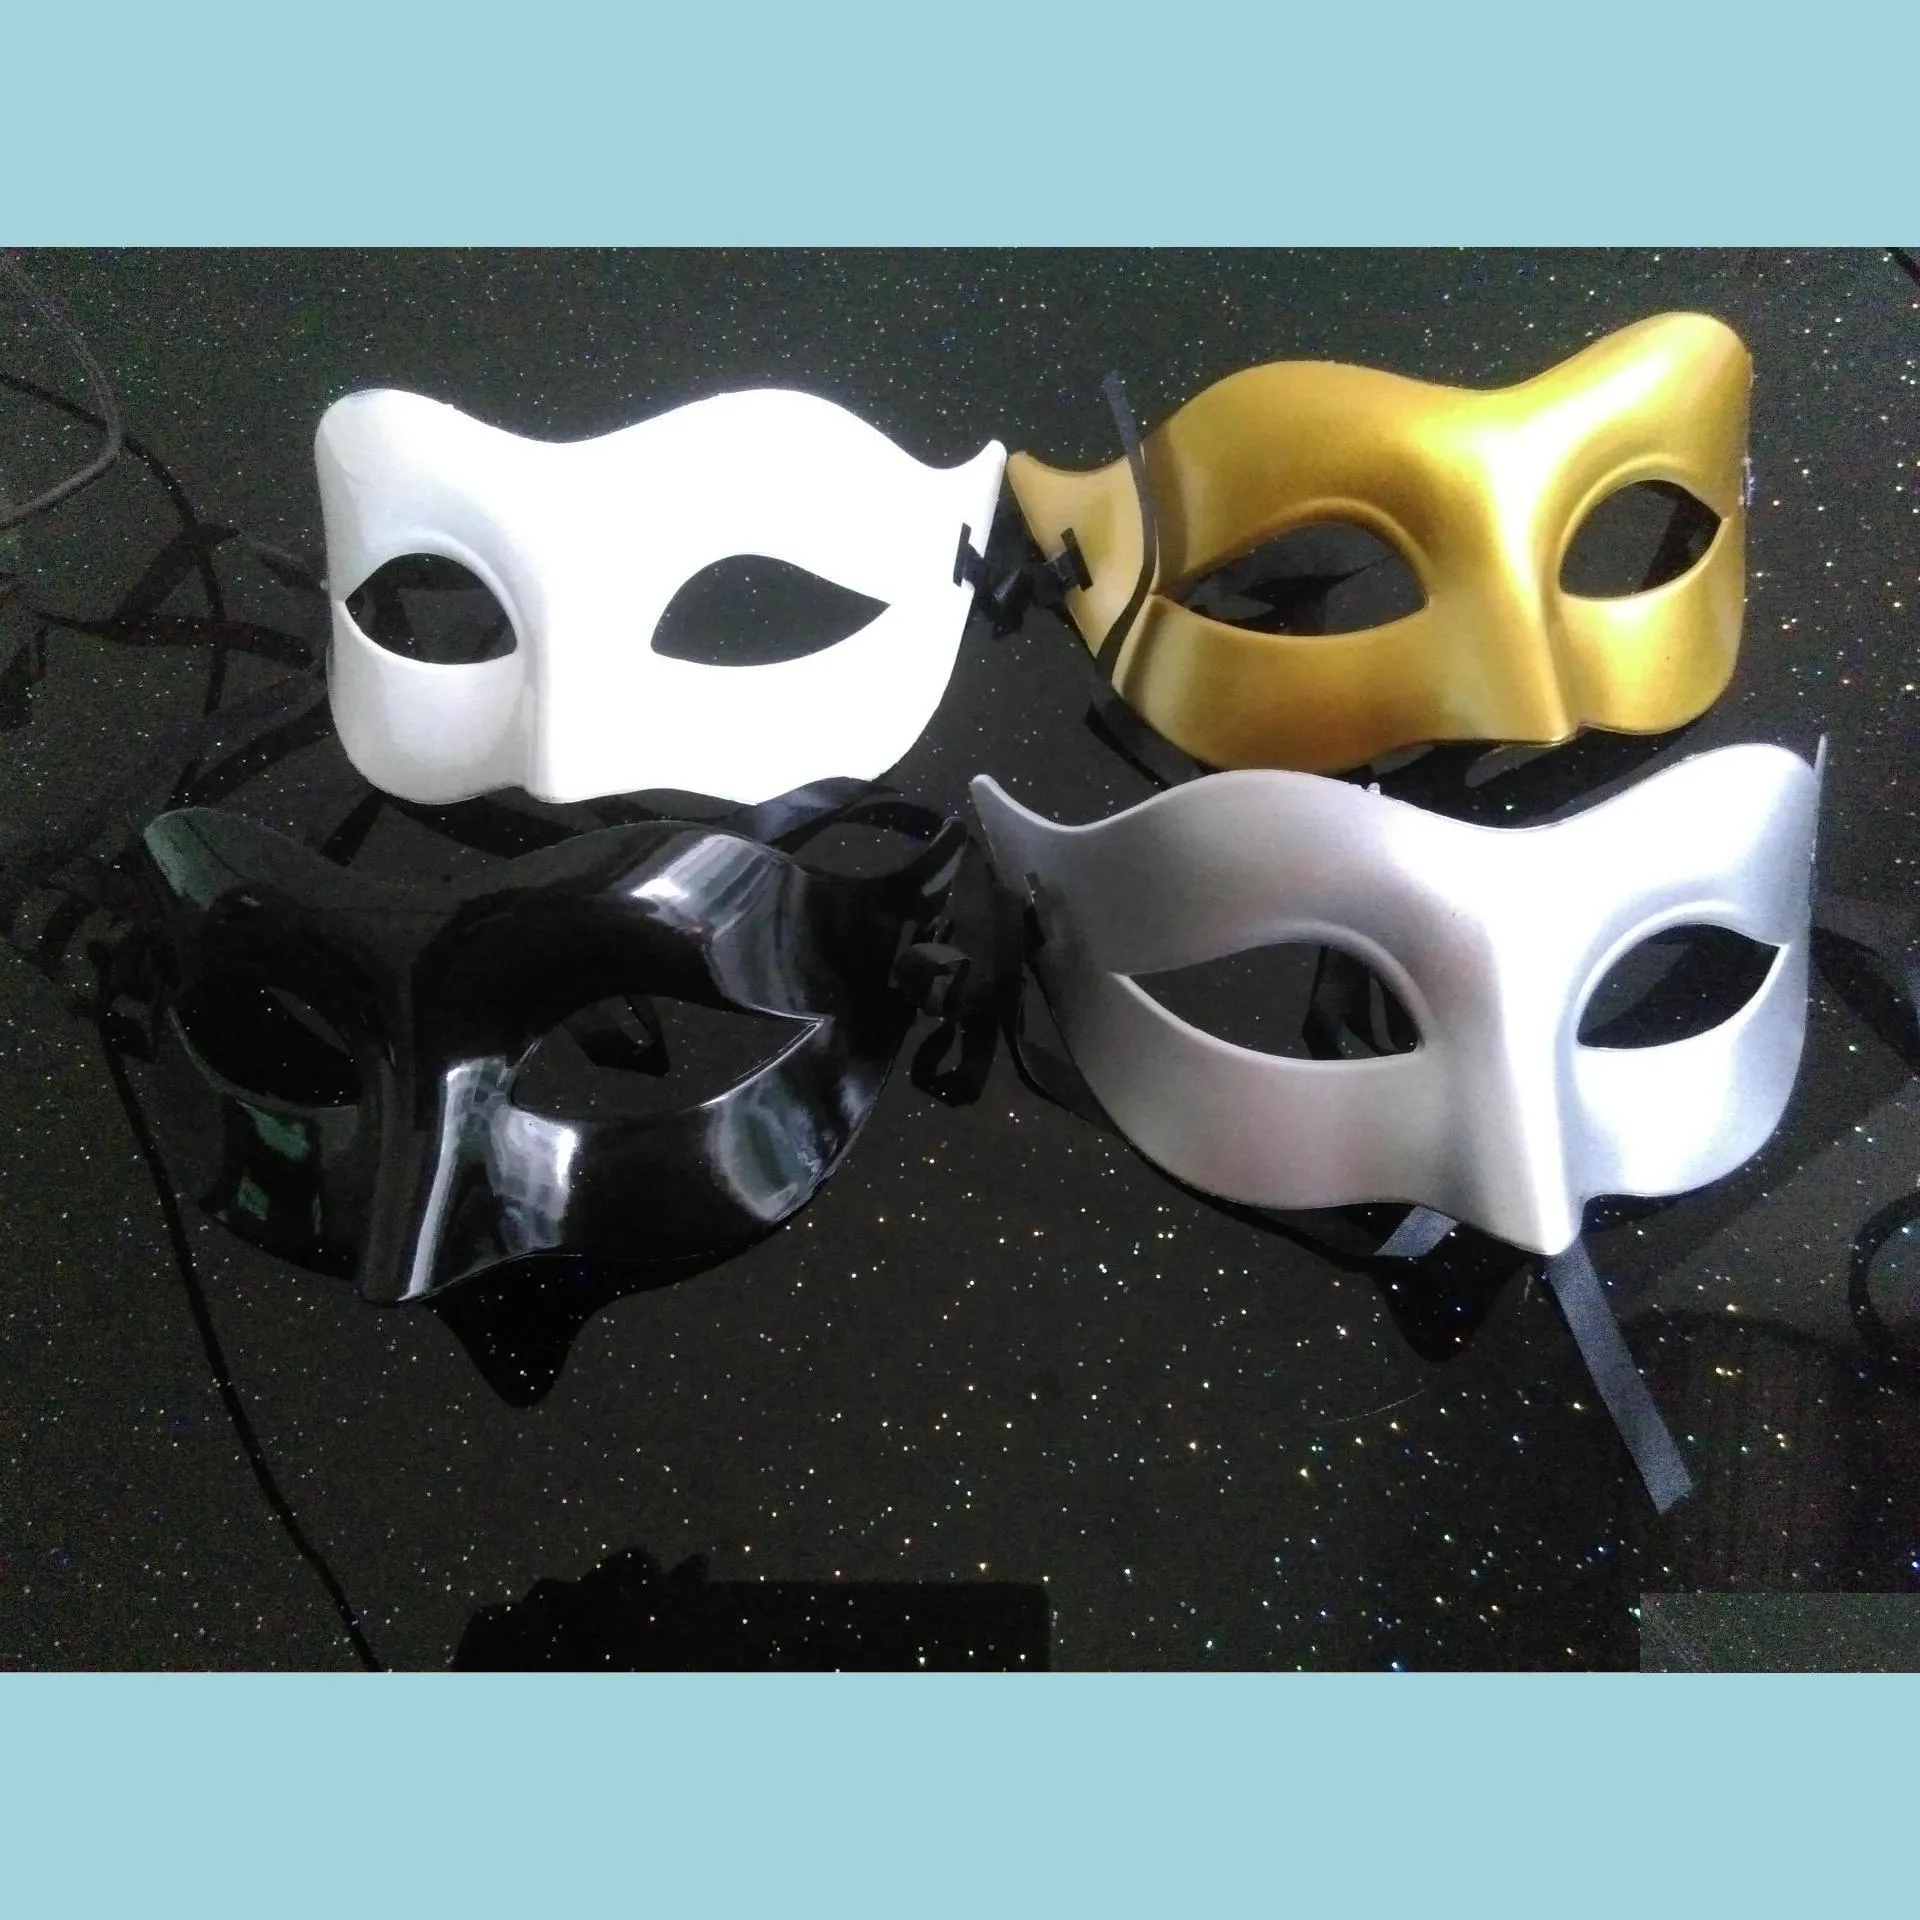 man half face mask for halloween unisex party venetian masquerade decorations mardi gras makeup masks for dance banquet 0 9rh zz